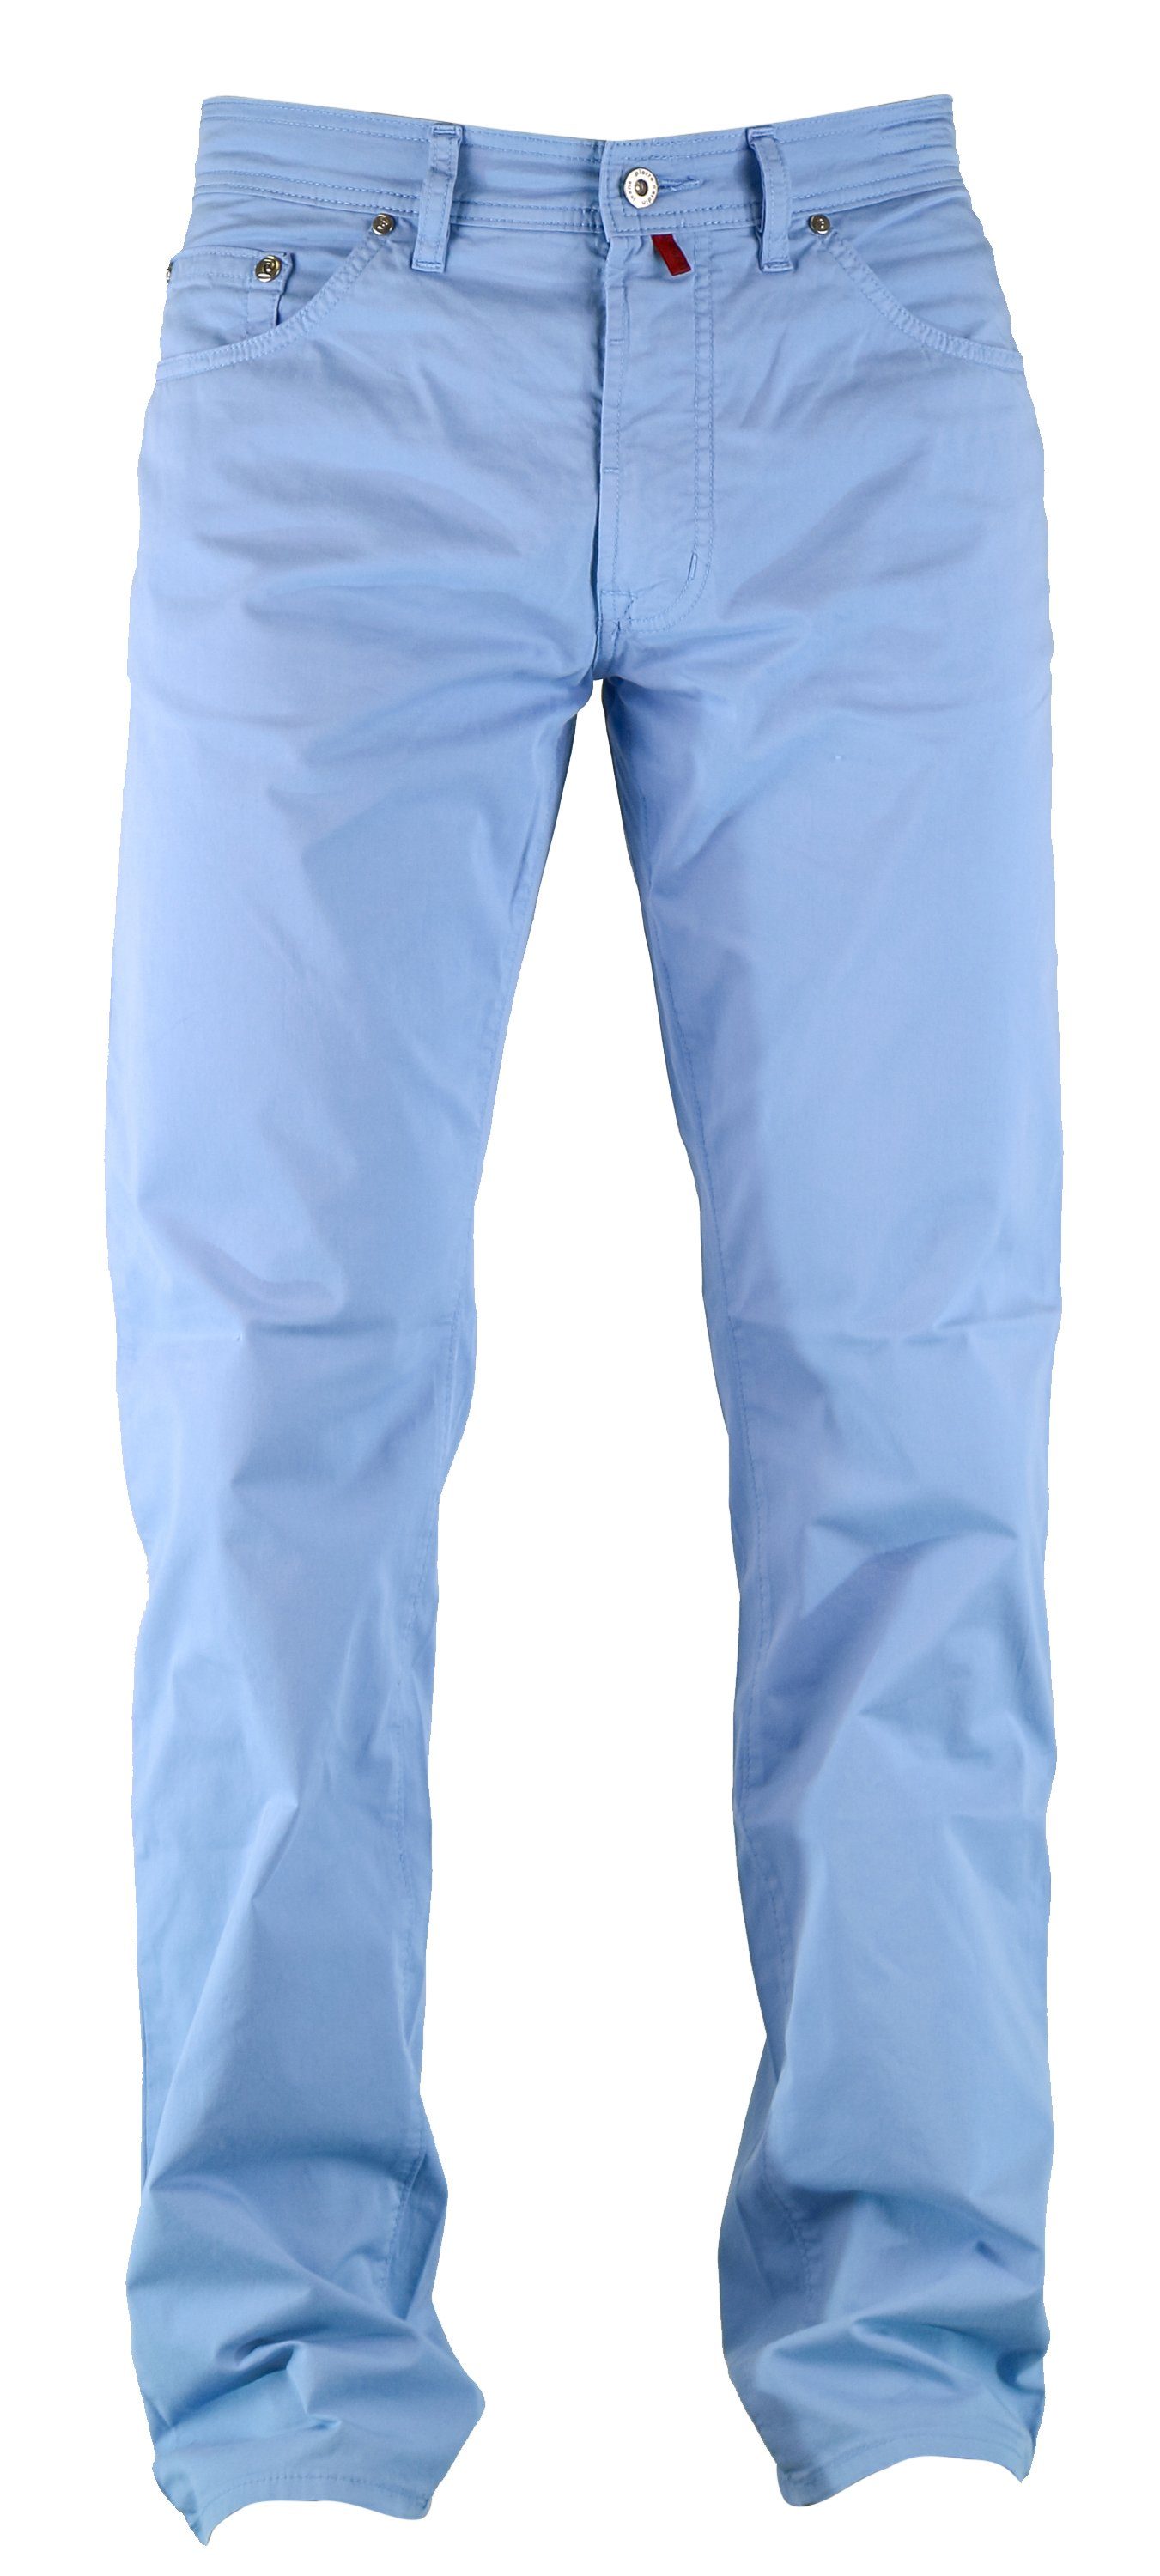 Pierre Cardin 5-Pocket-Jeans PIERRE CARDIN DEAUVILLE summer air touch blue 3196 2021.65